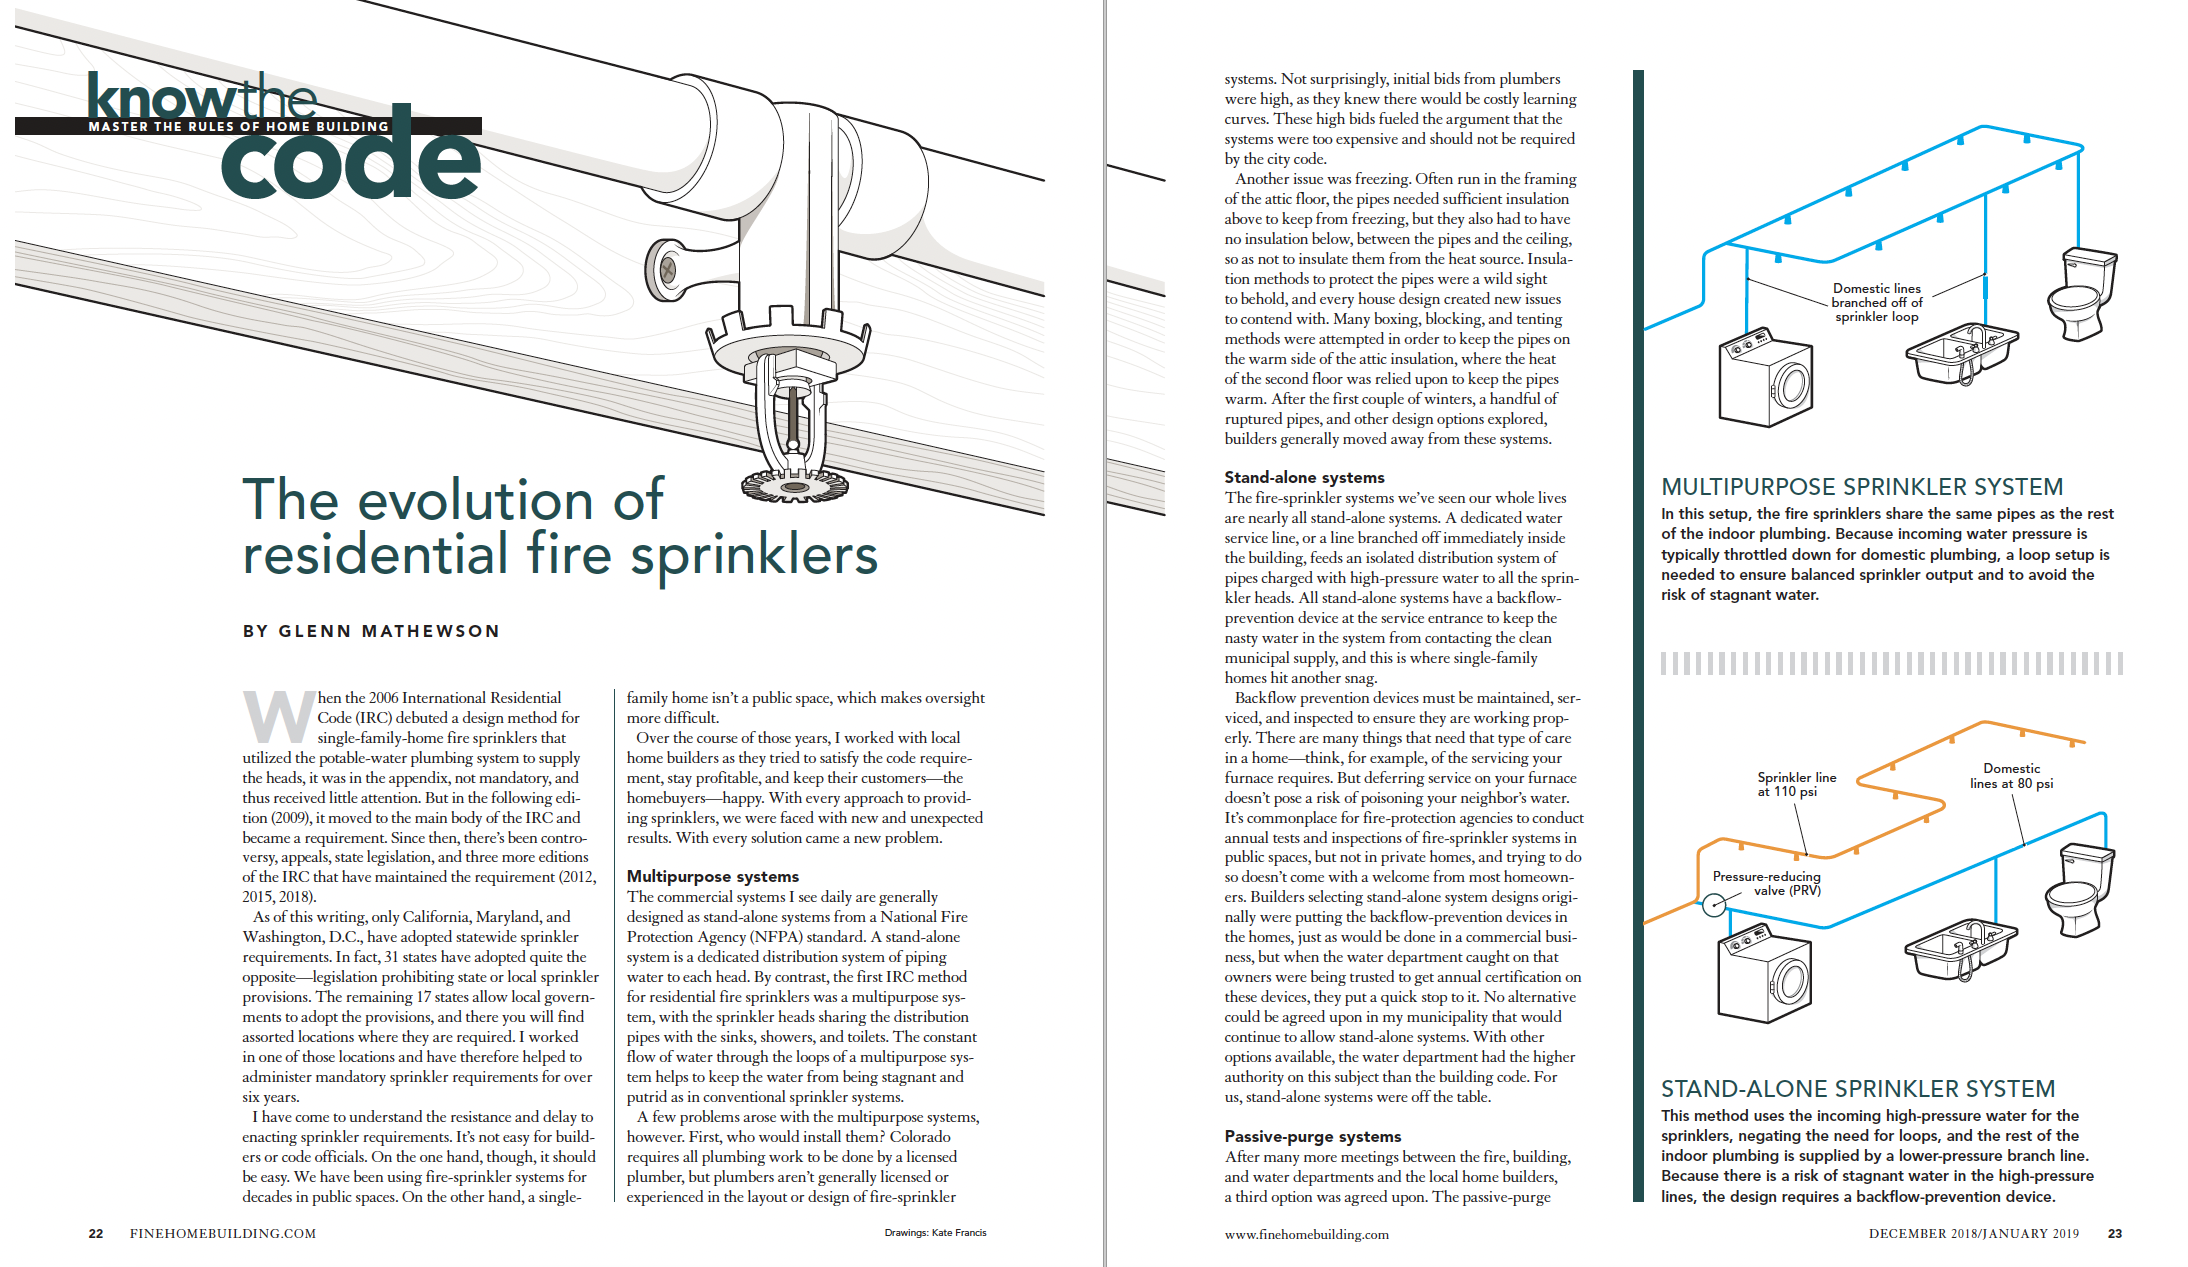 fire sprinklers magazine spread